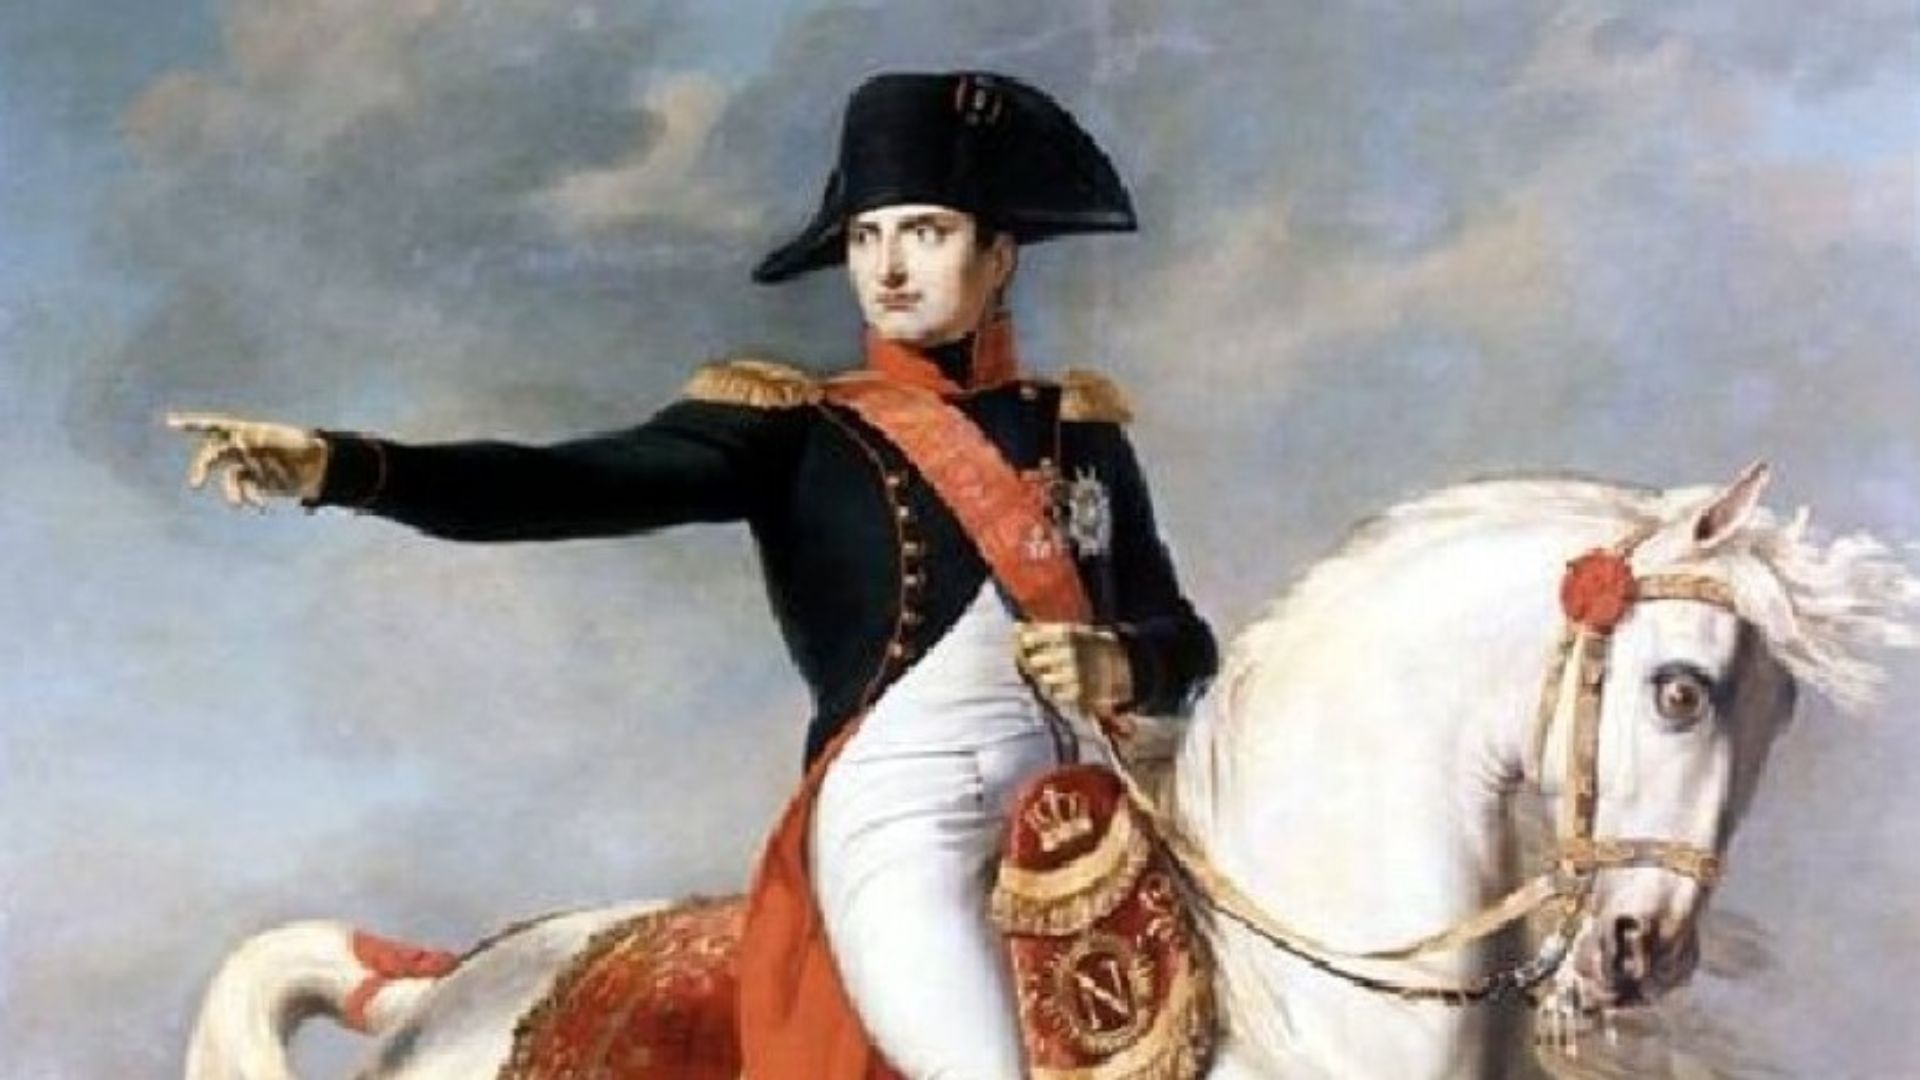 Perang Napoleon: Konflik di Bawah Kepemimpinan Napoleon